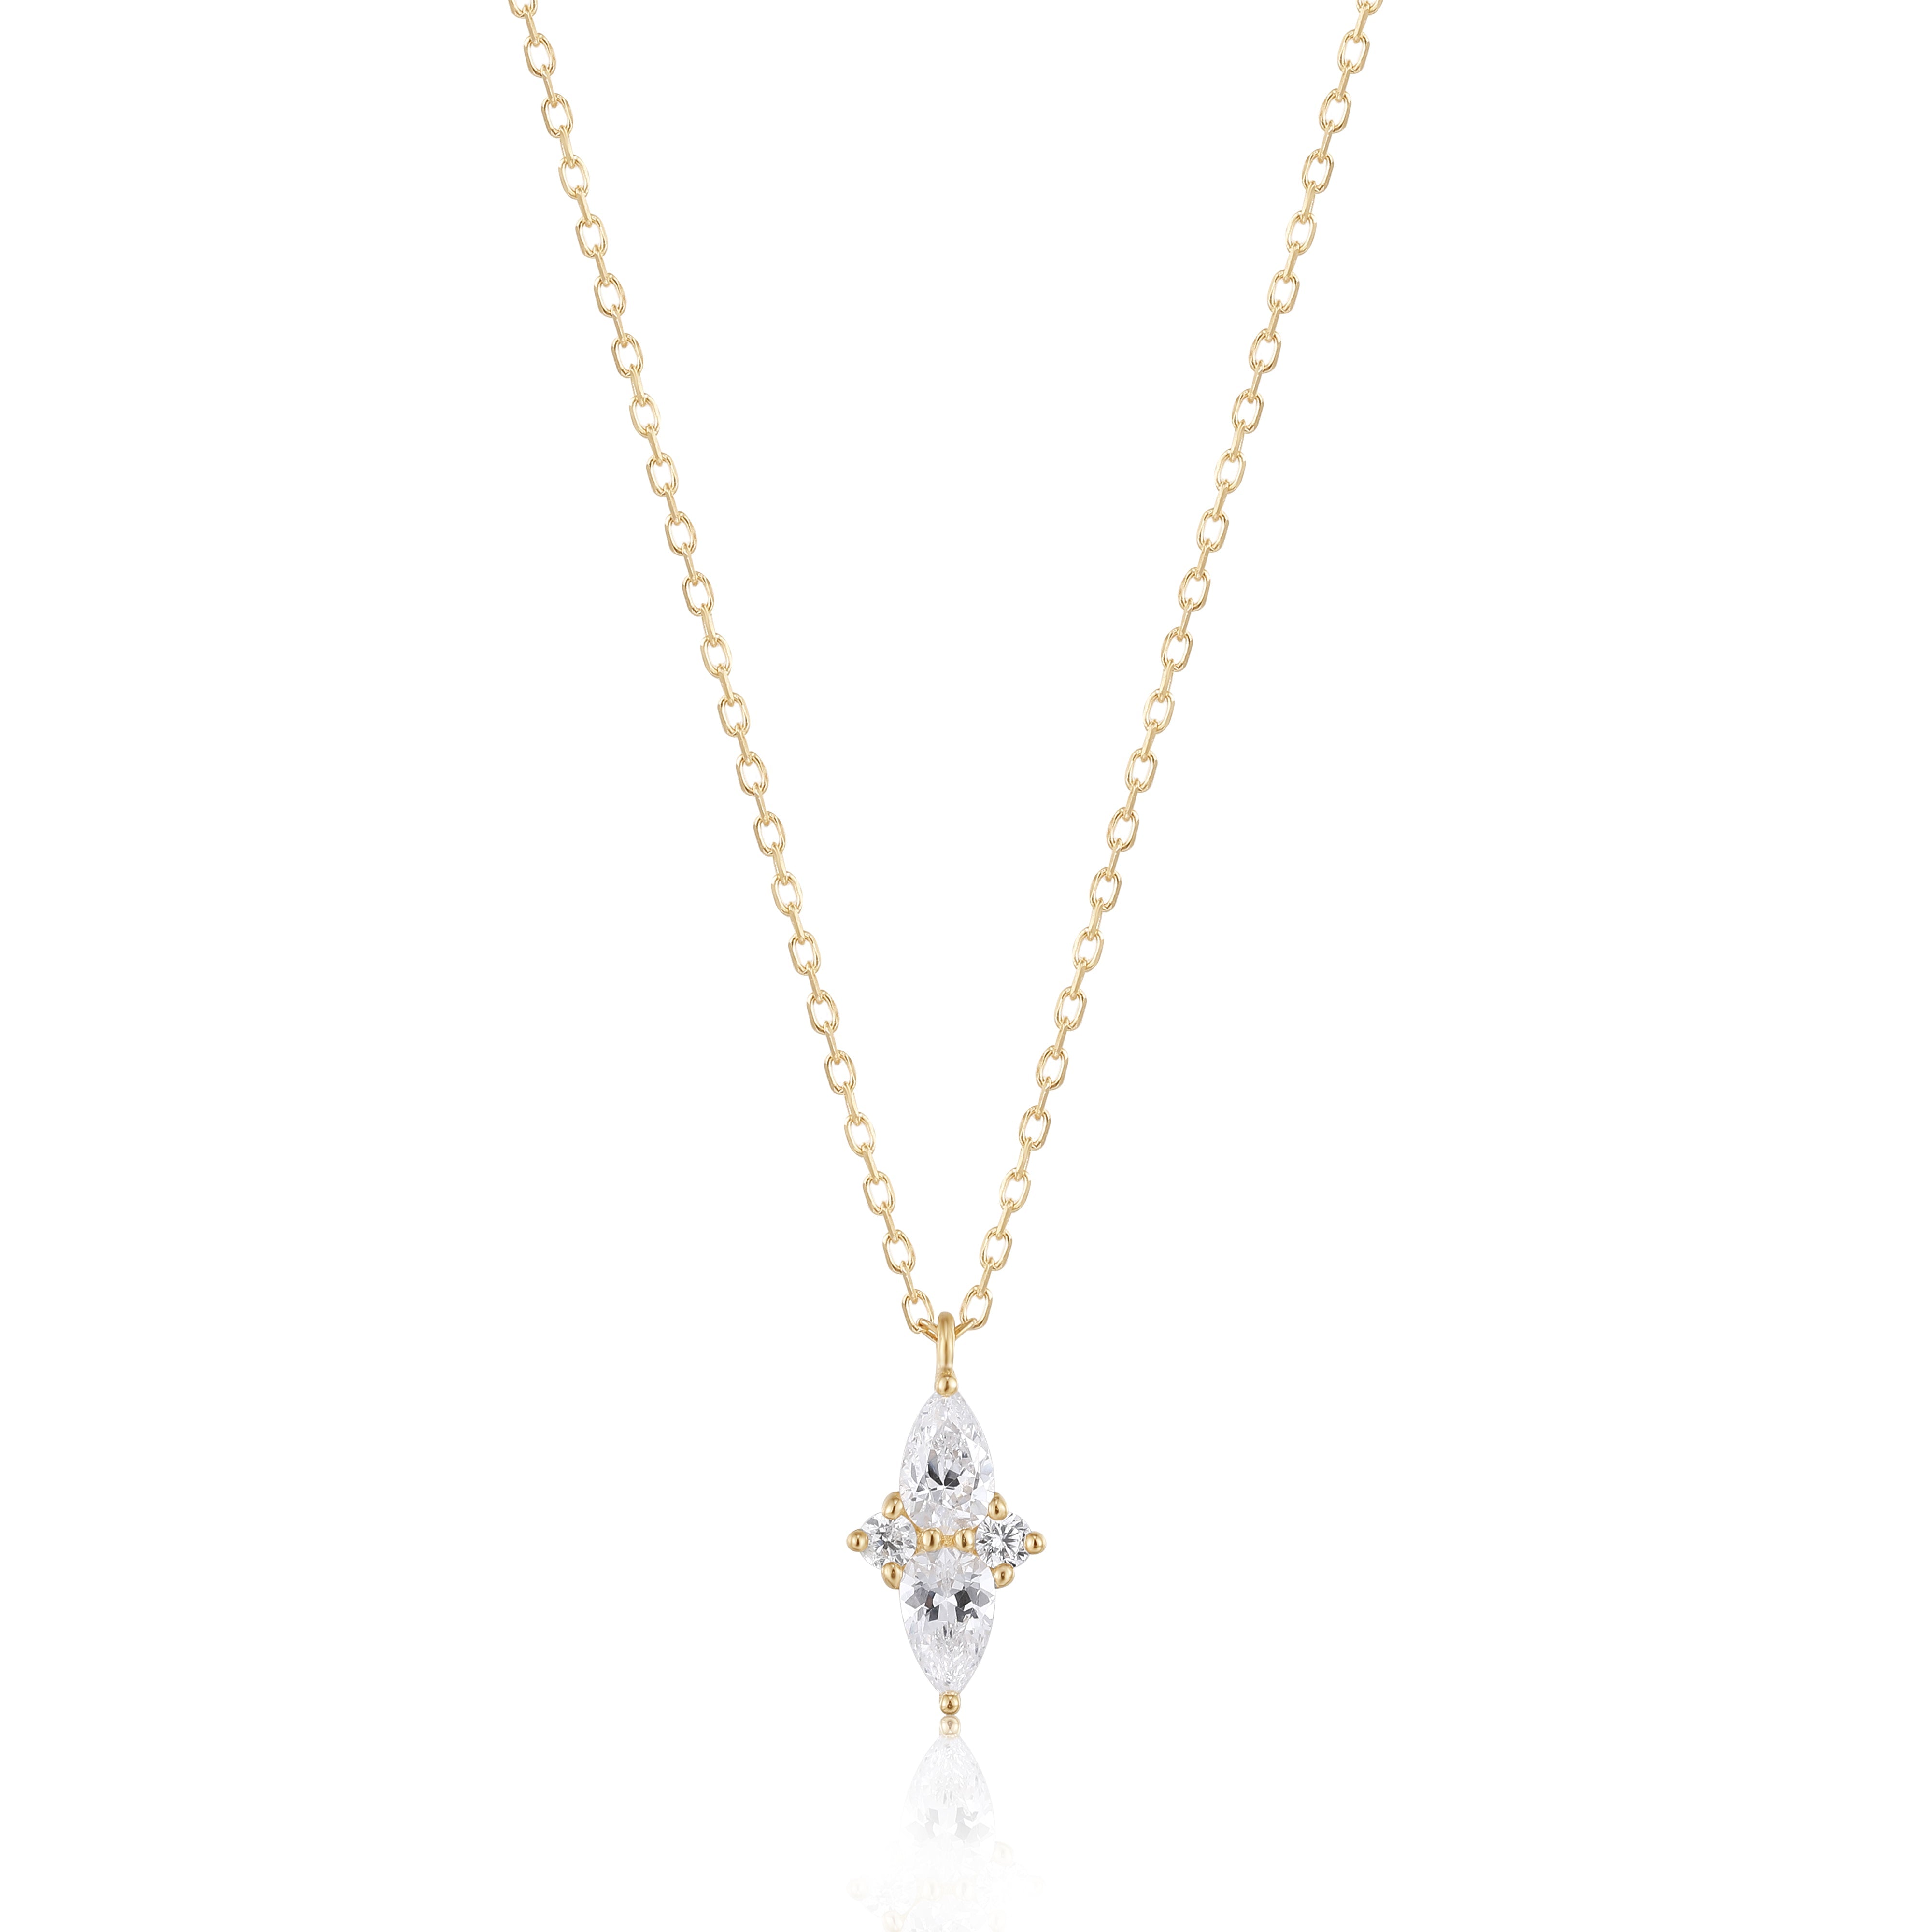 Davis Sterling Silver Luxe Pendant Necklace in White Sapphire | Kendra Scott